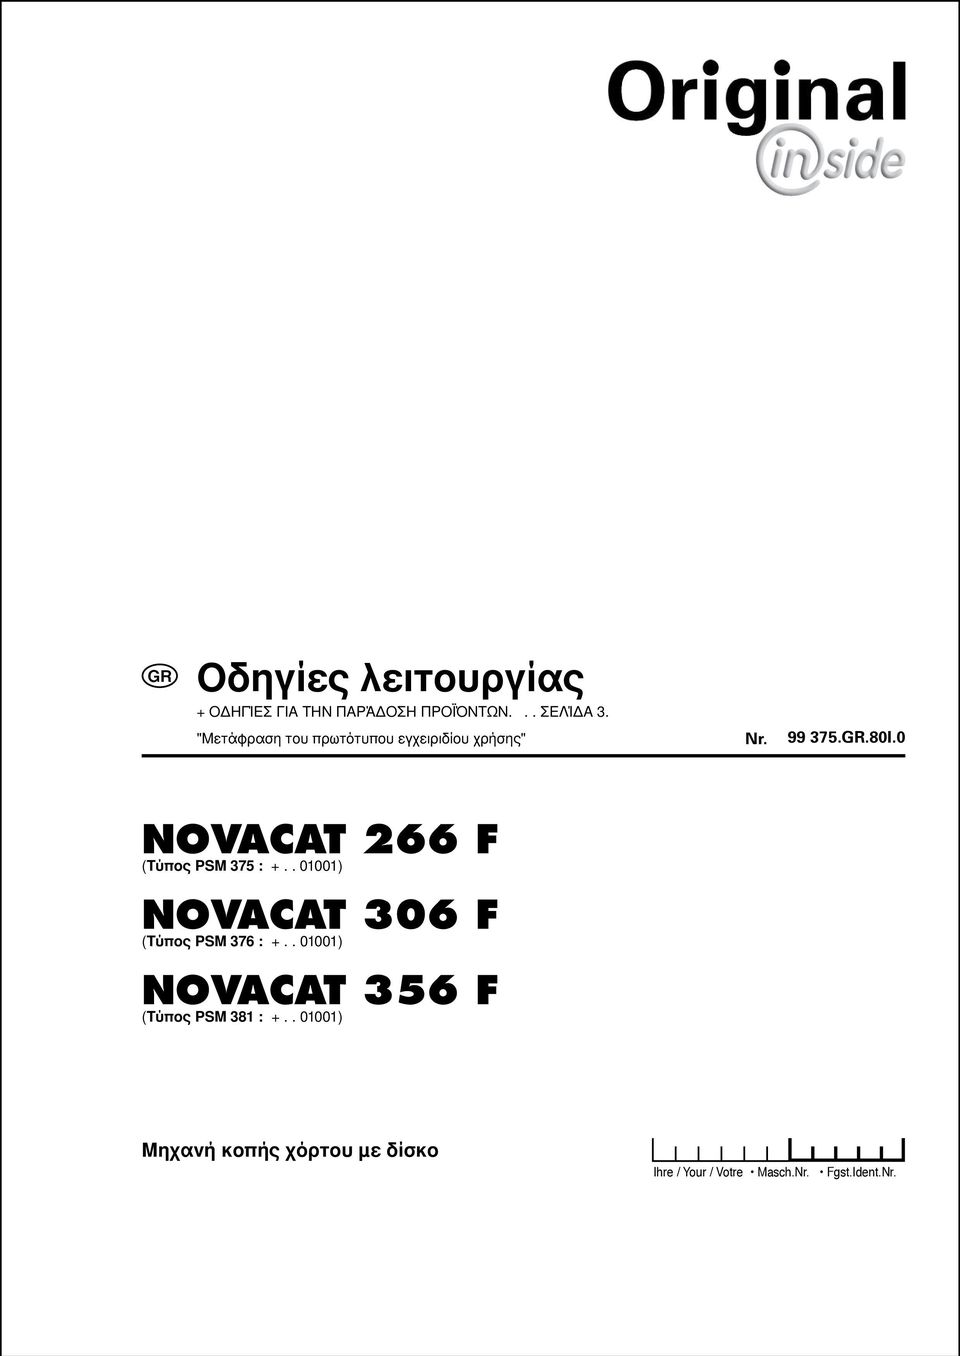 . 01001) NOVACAT 356 F (Τύπος PSM 381 : +.